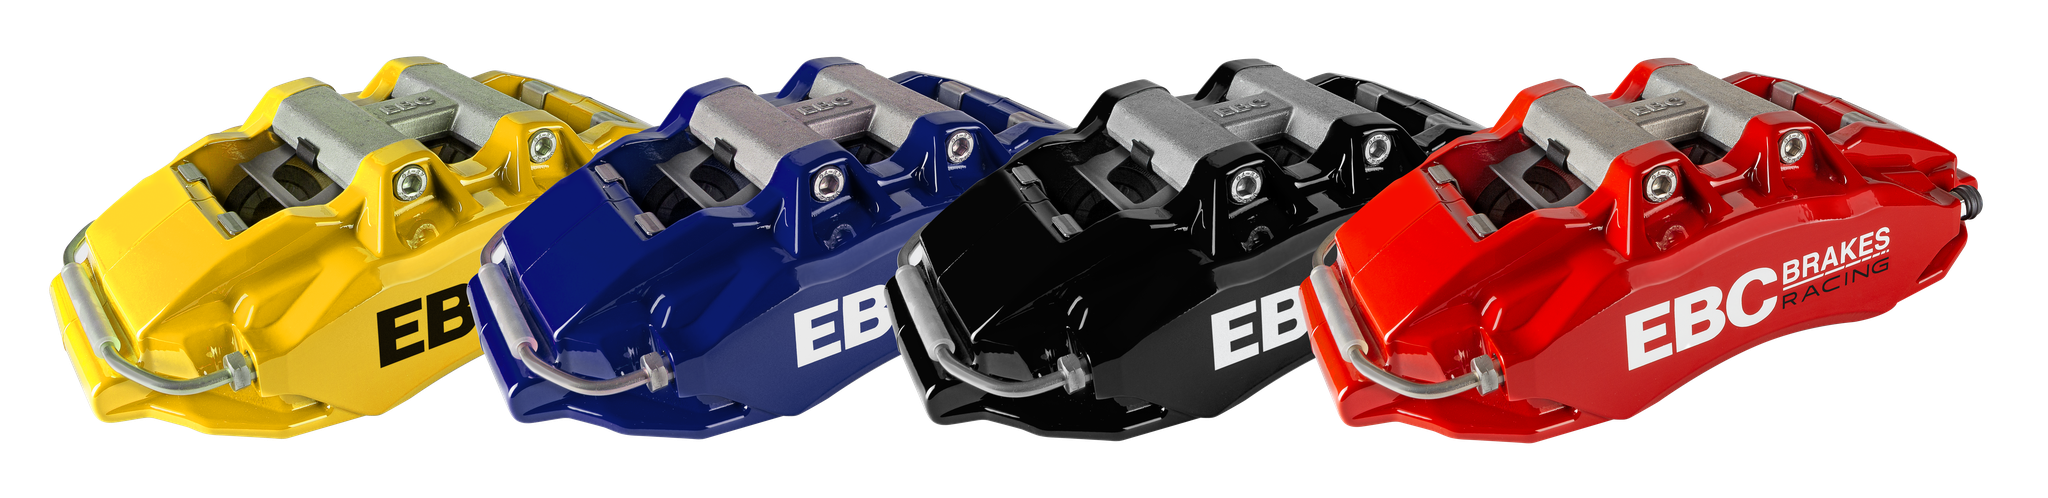 EBC Racing 92-05 BMW 3-Series E36/E46 Apollo-6 Calipers 355mm Rotors Front Big Brake Kit